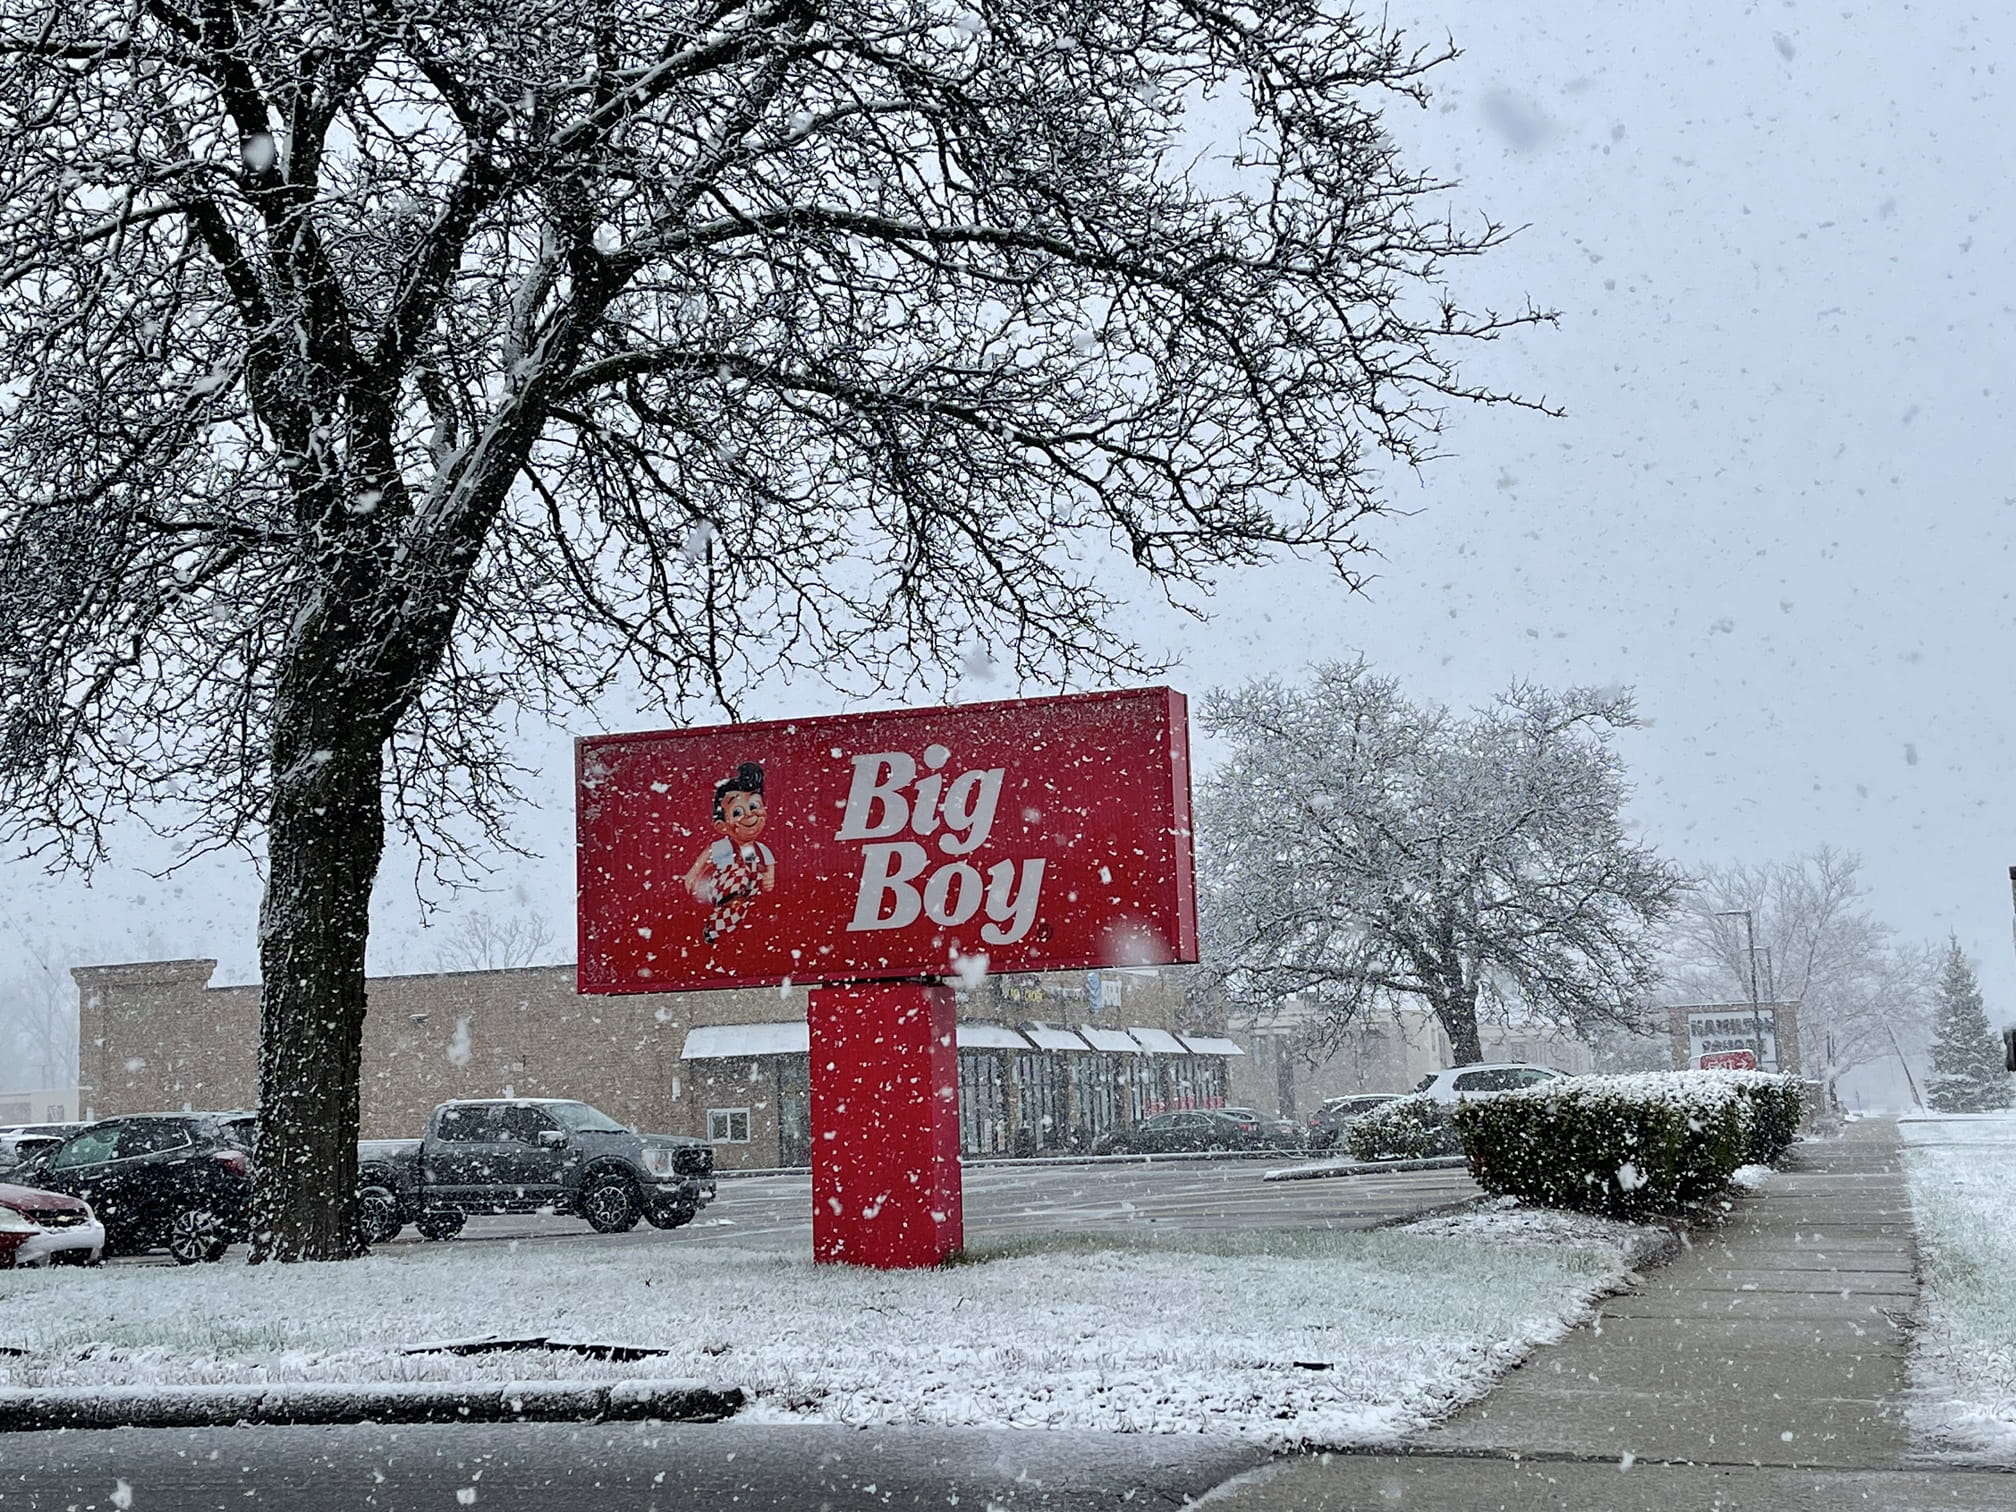 Big boy in the snow